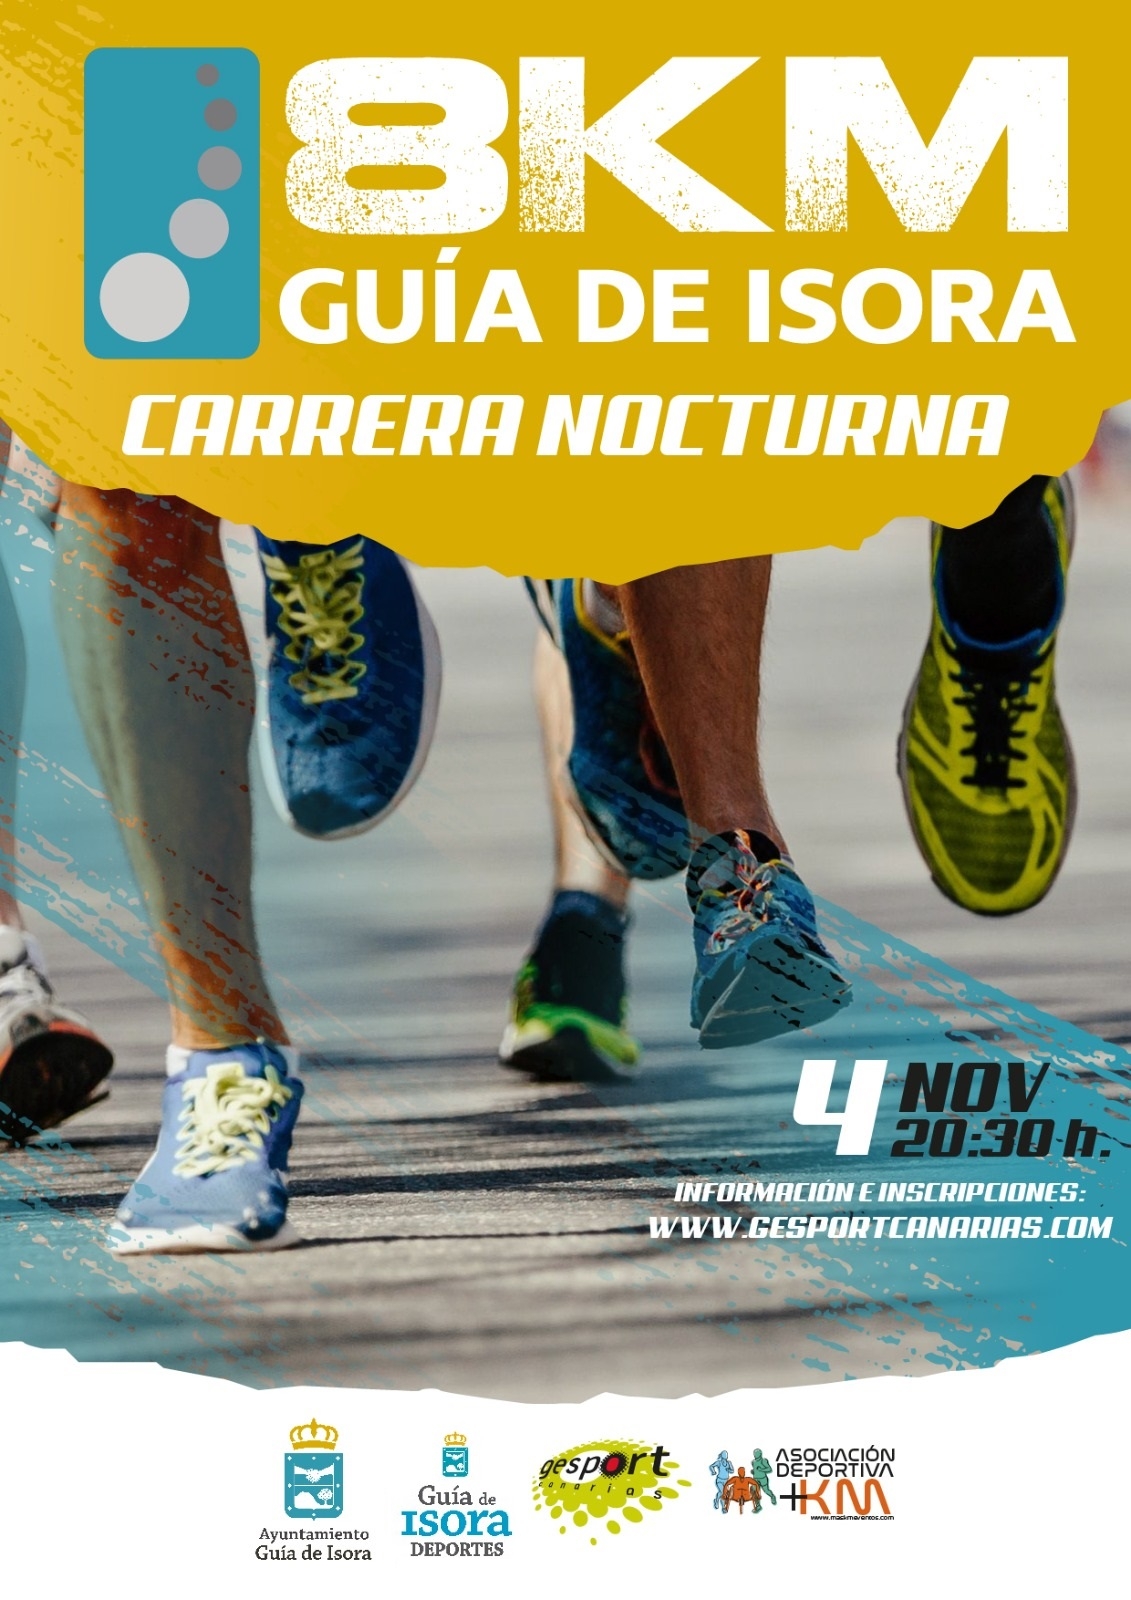 CARRERA NOCTURNA GUIA DE ISORA 2023 - Inscríbete